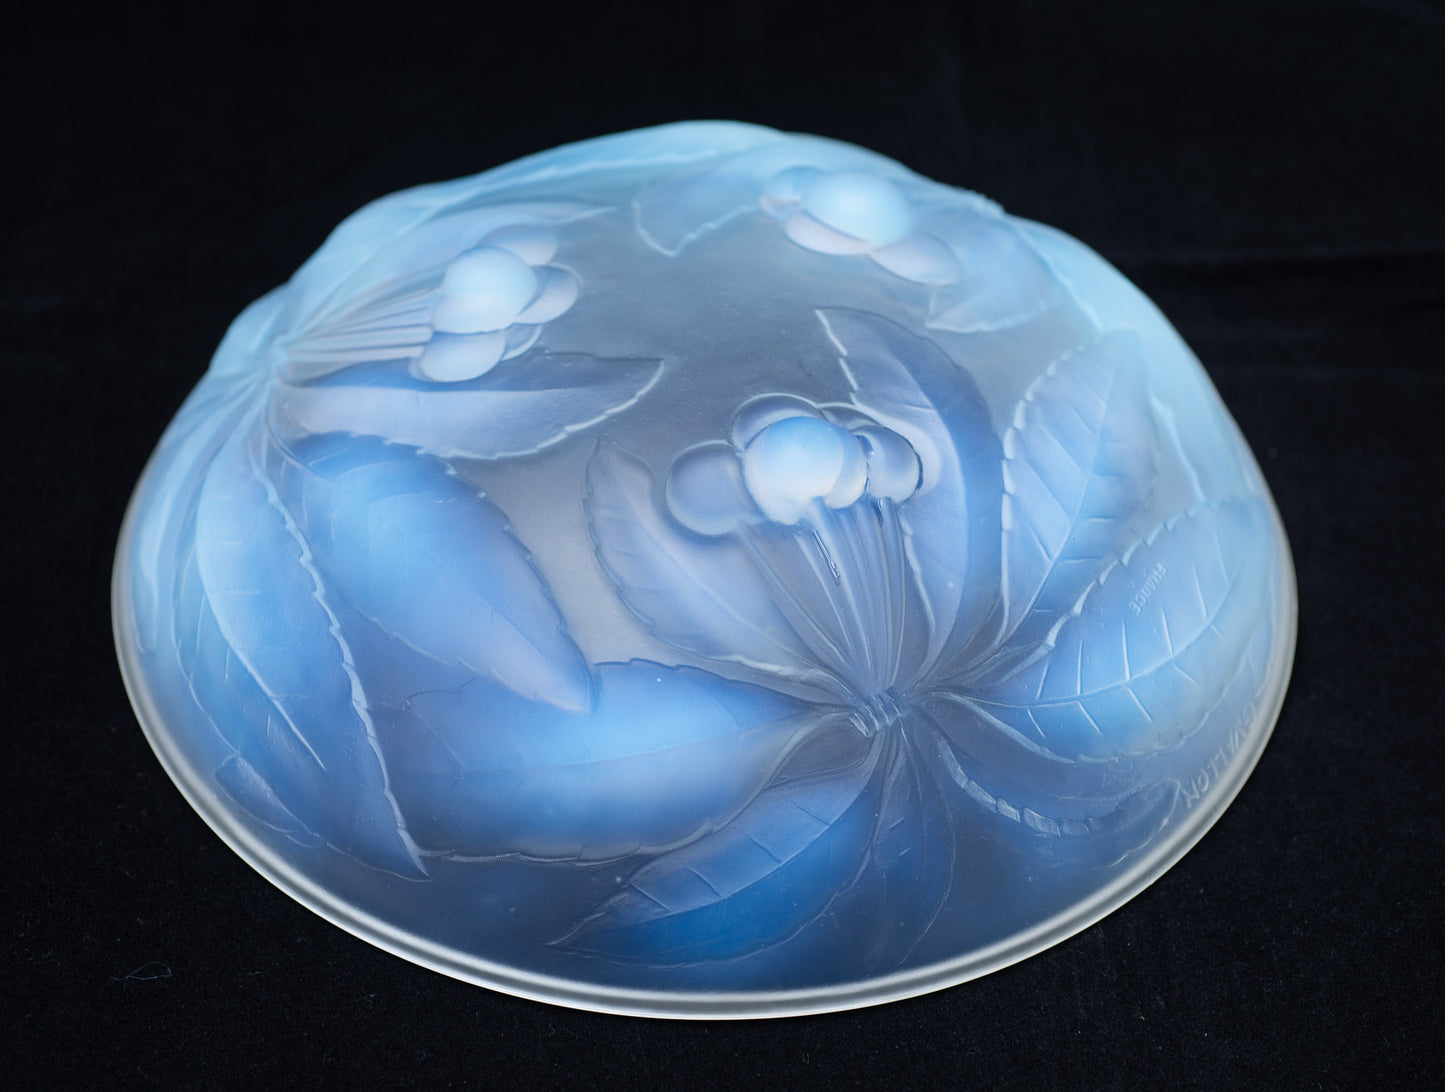 G Vallon Opalescent Glass Bowl Art Deco Period Cerises (Cherries) Design (3058)